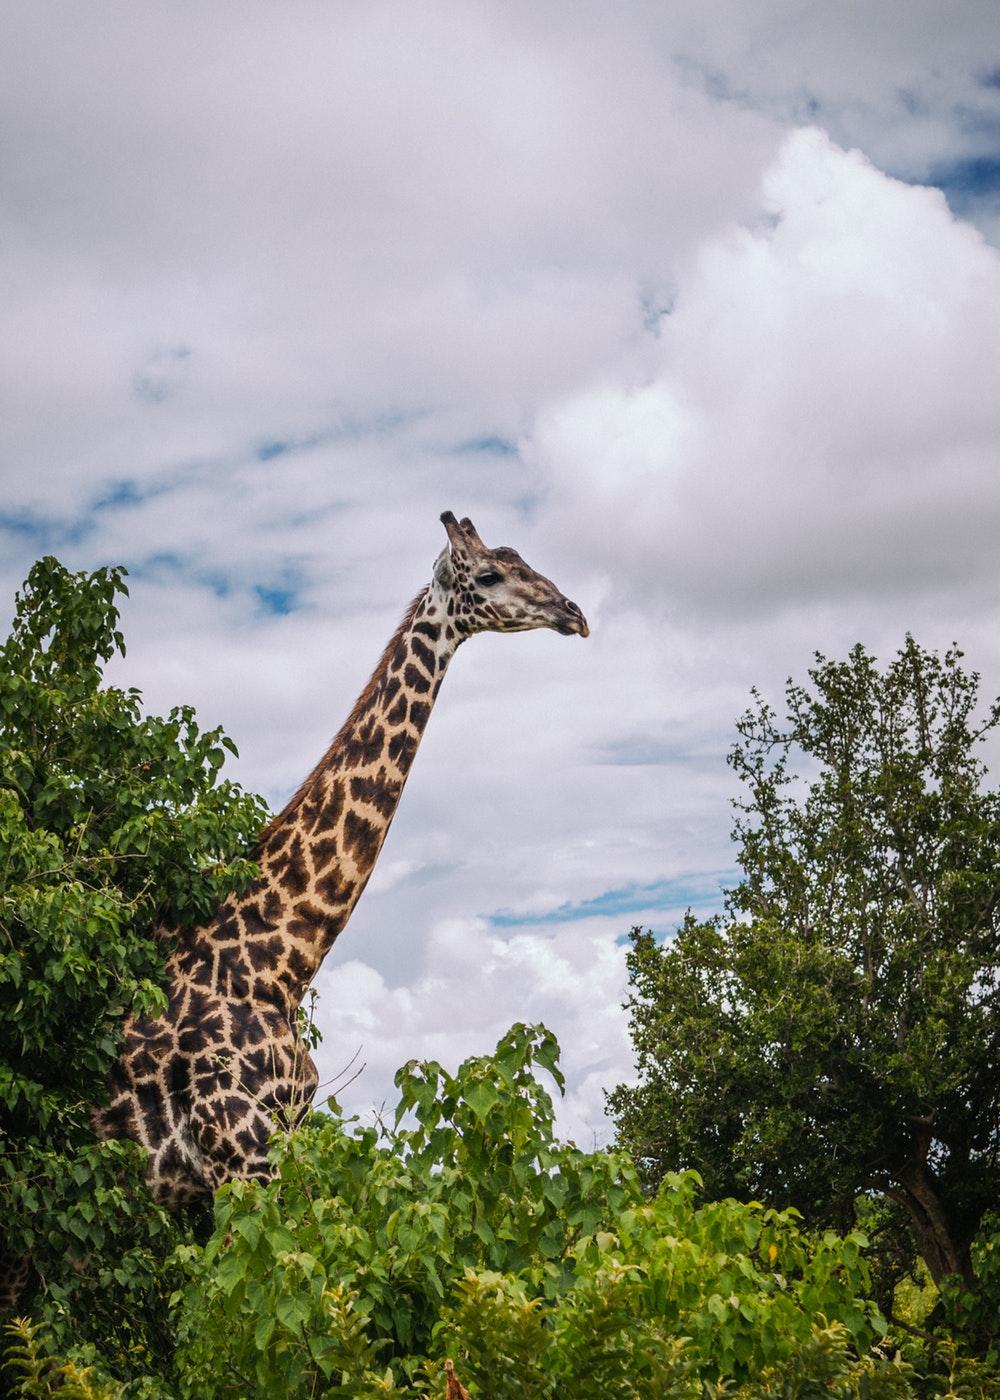 Giraffe Picture [HD]. Download Free Image